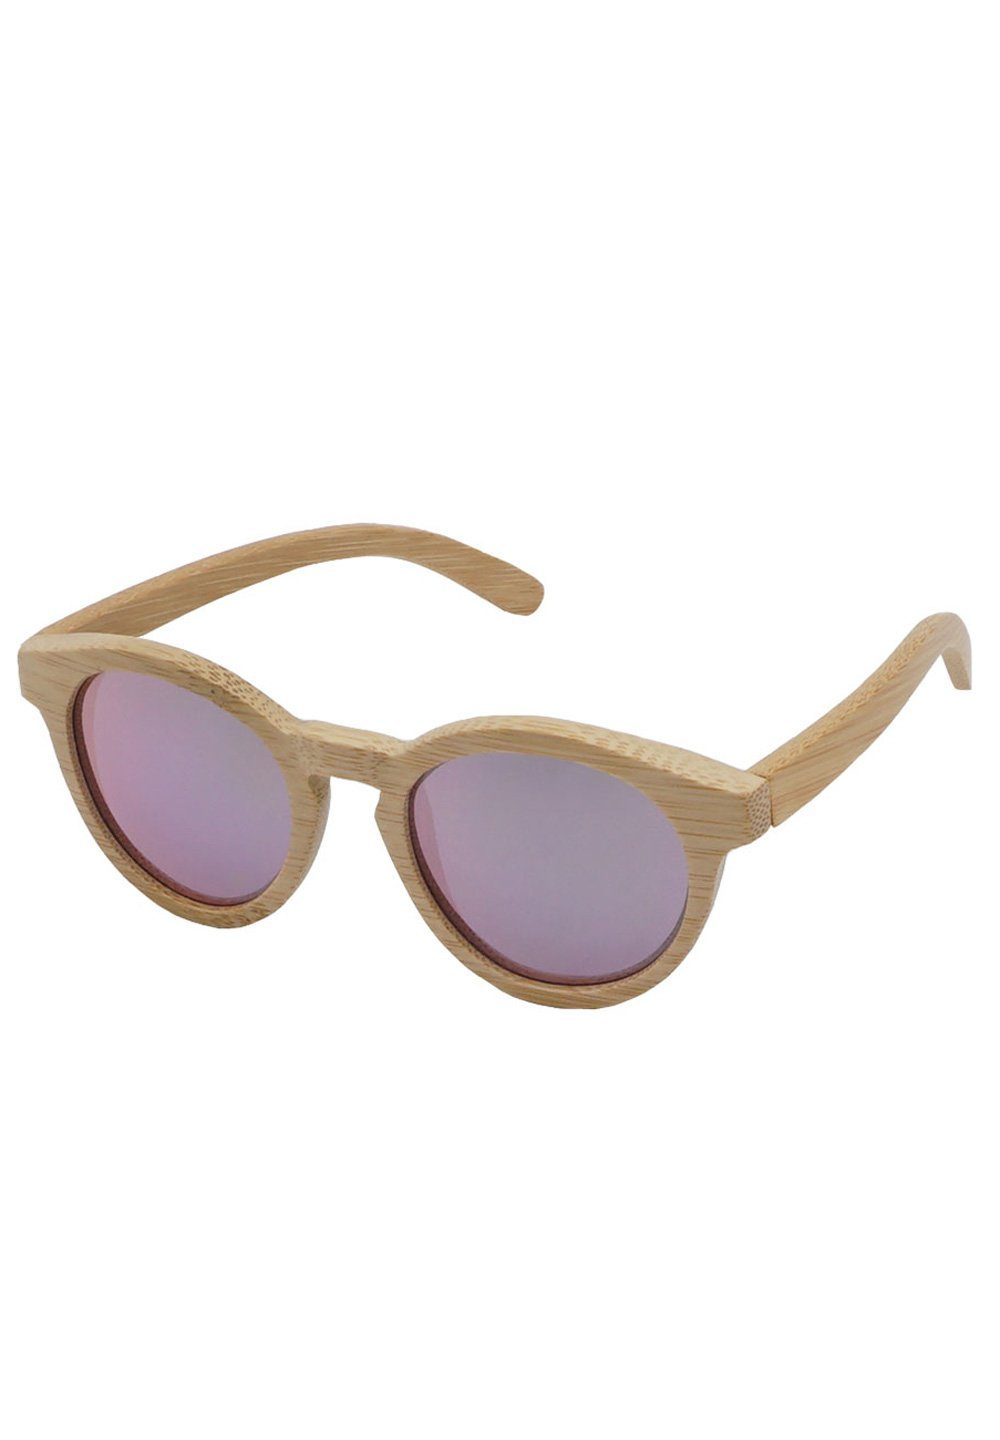 CAPO Sonnenbrille Sonnenbrille Bambus pink Kunststoffgläser